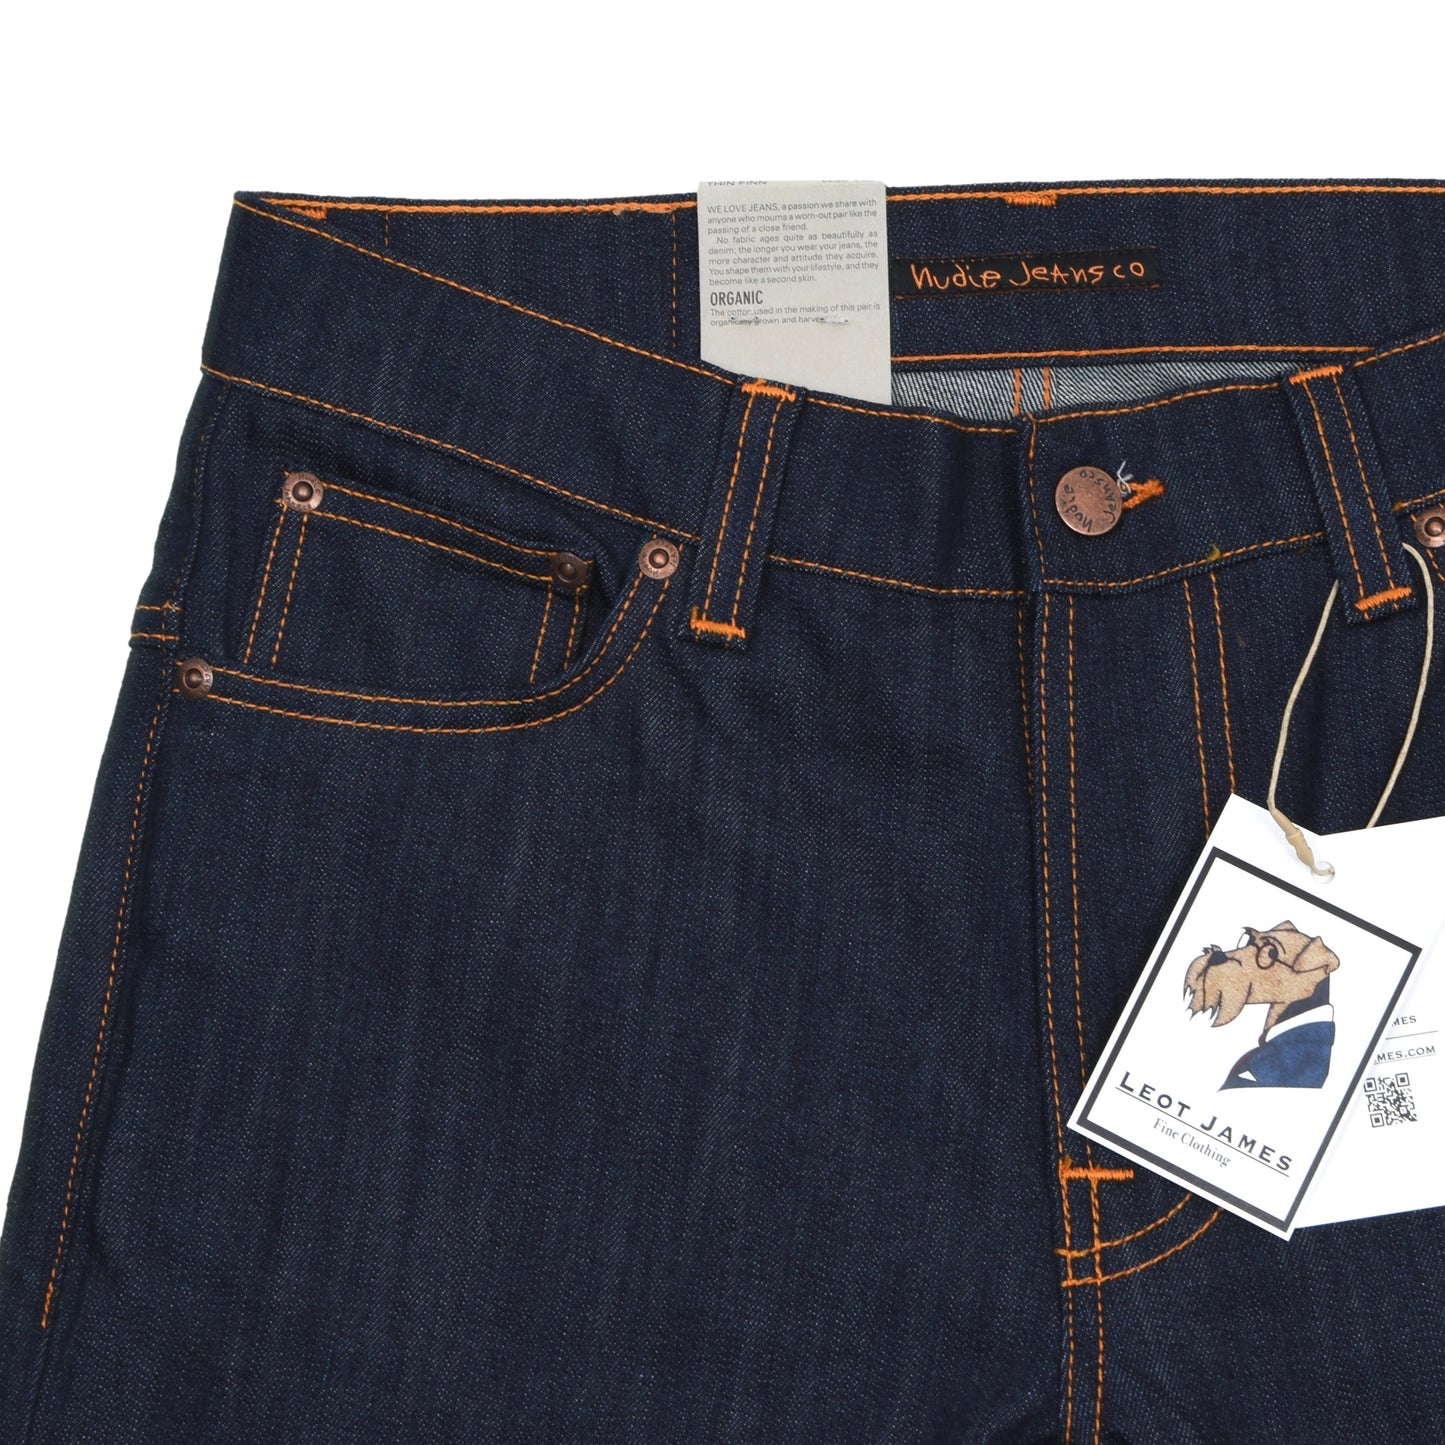 NWT Nudie Thin Finn Jeans Size W30 L 30 - Blue